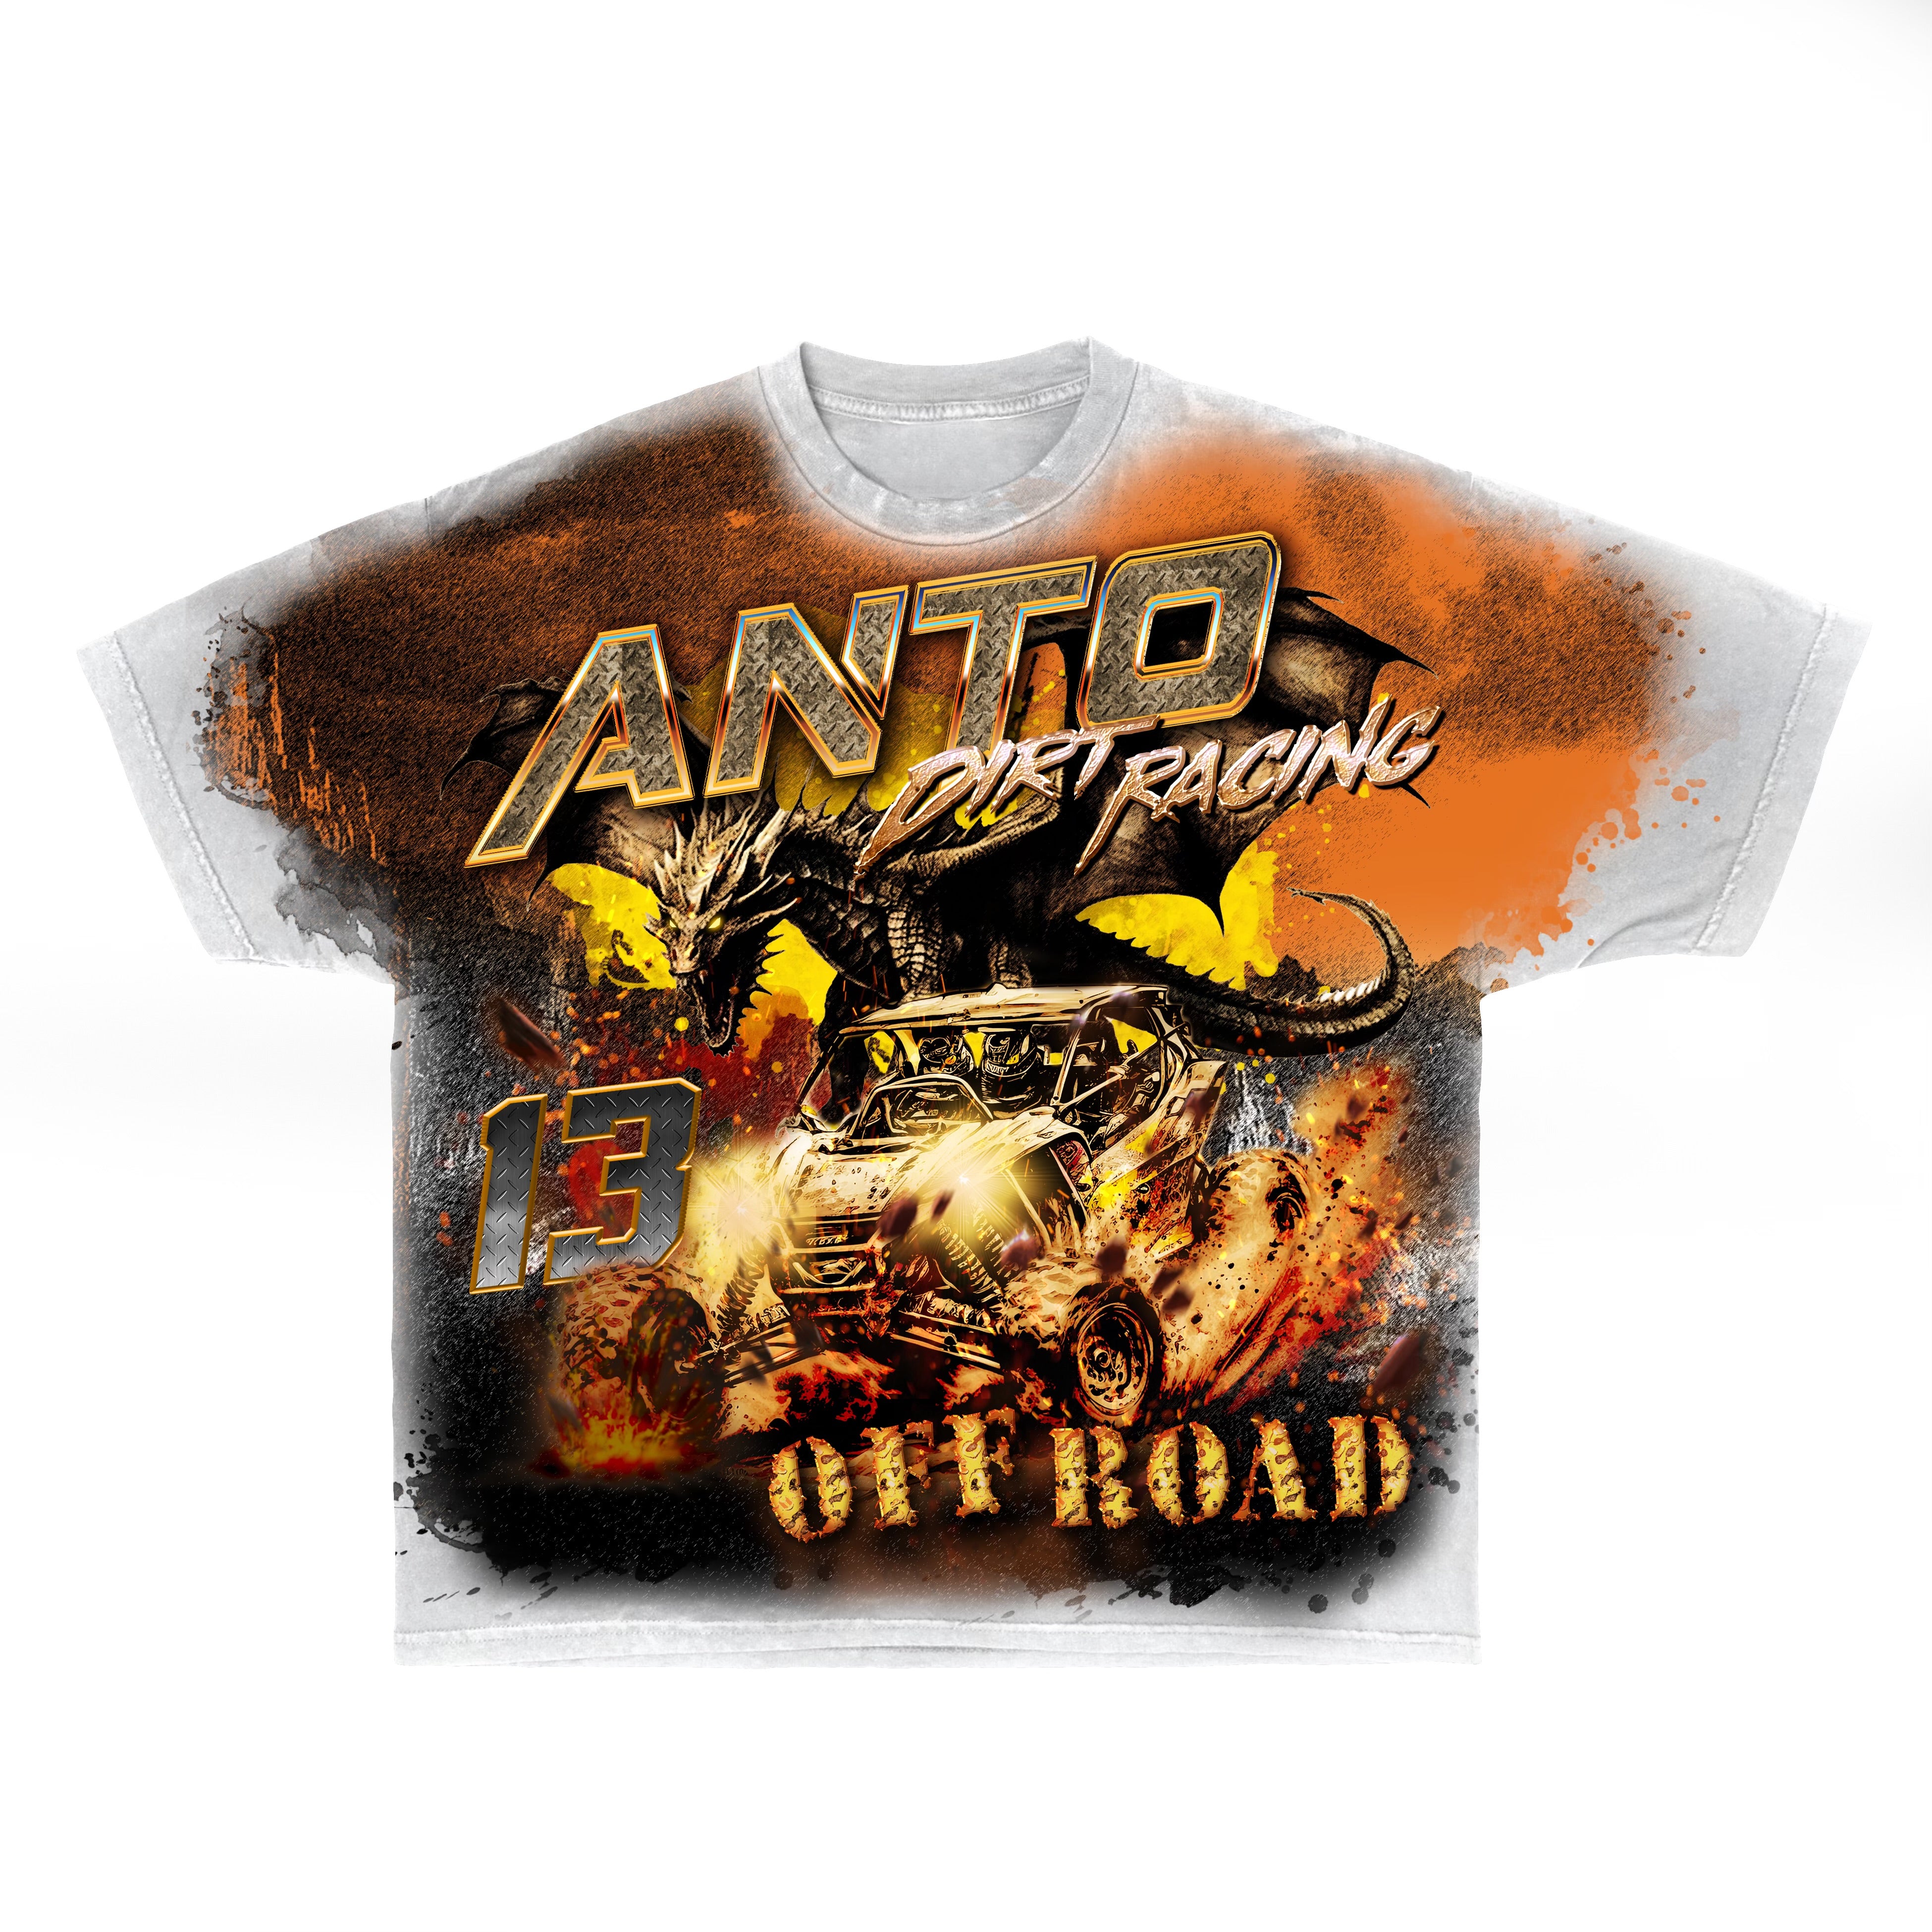 Anto “Off Road” Tee (White)